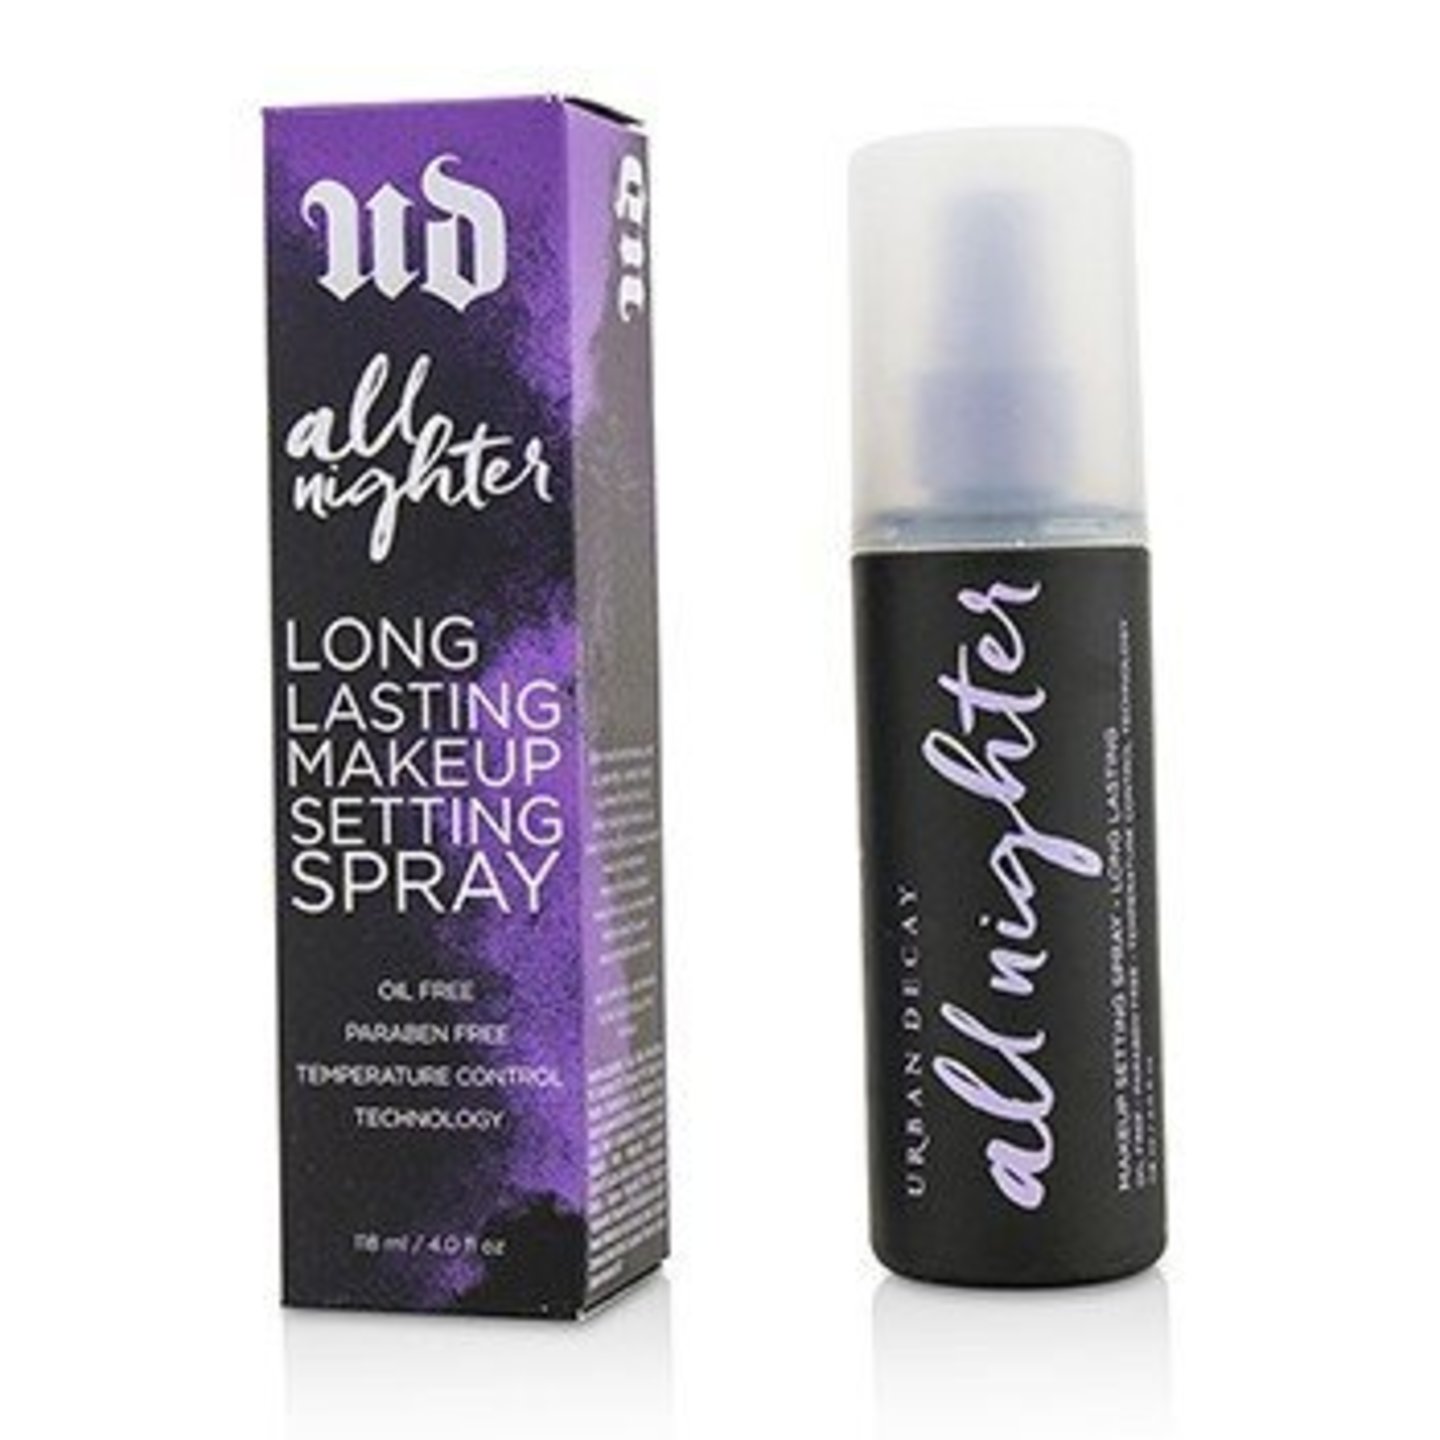 URBAN DECAY - All Nighter Long-Lasting Makeup Setting Spray